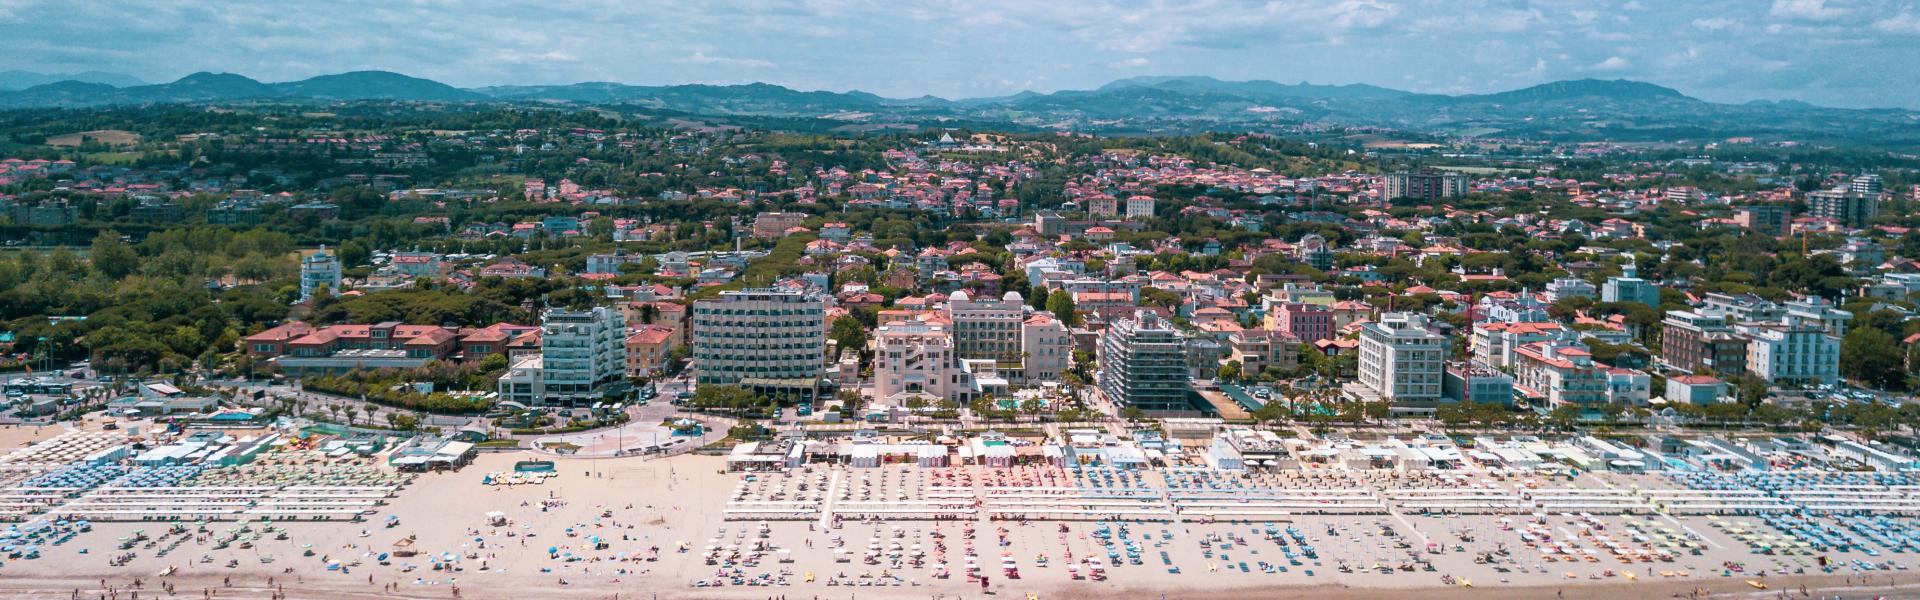 Riccione-beach-view